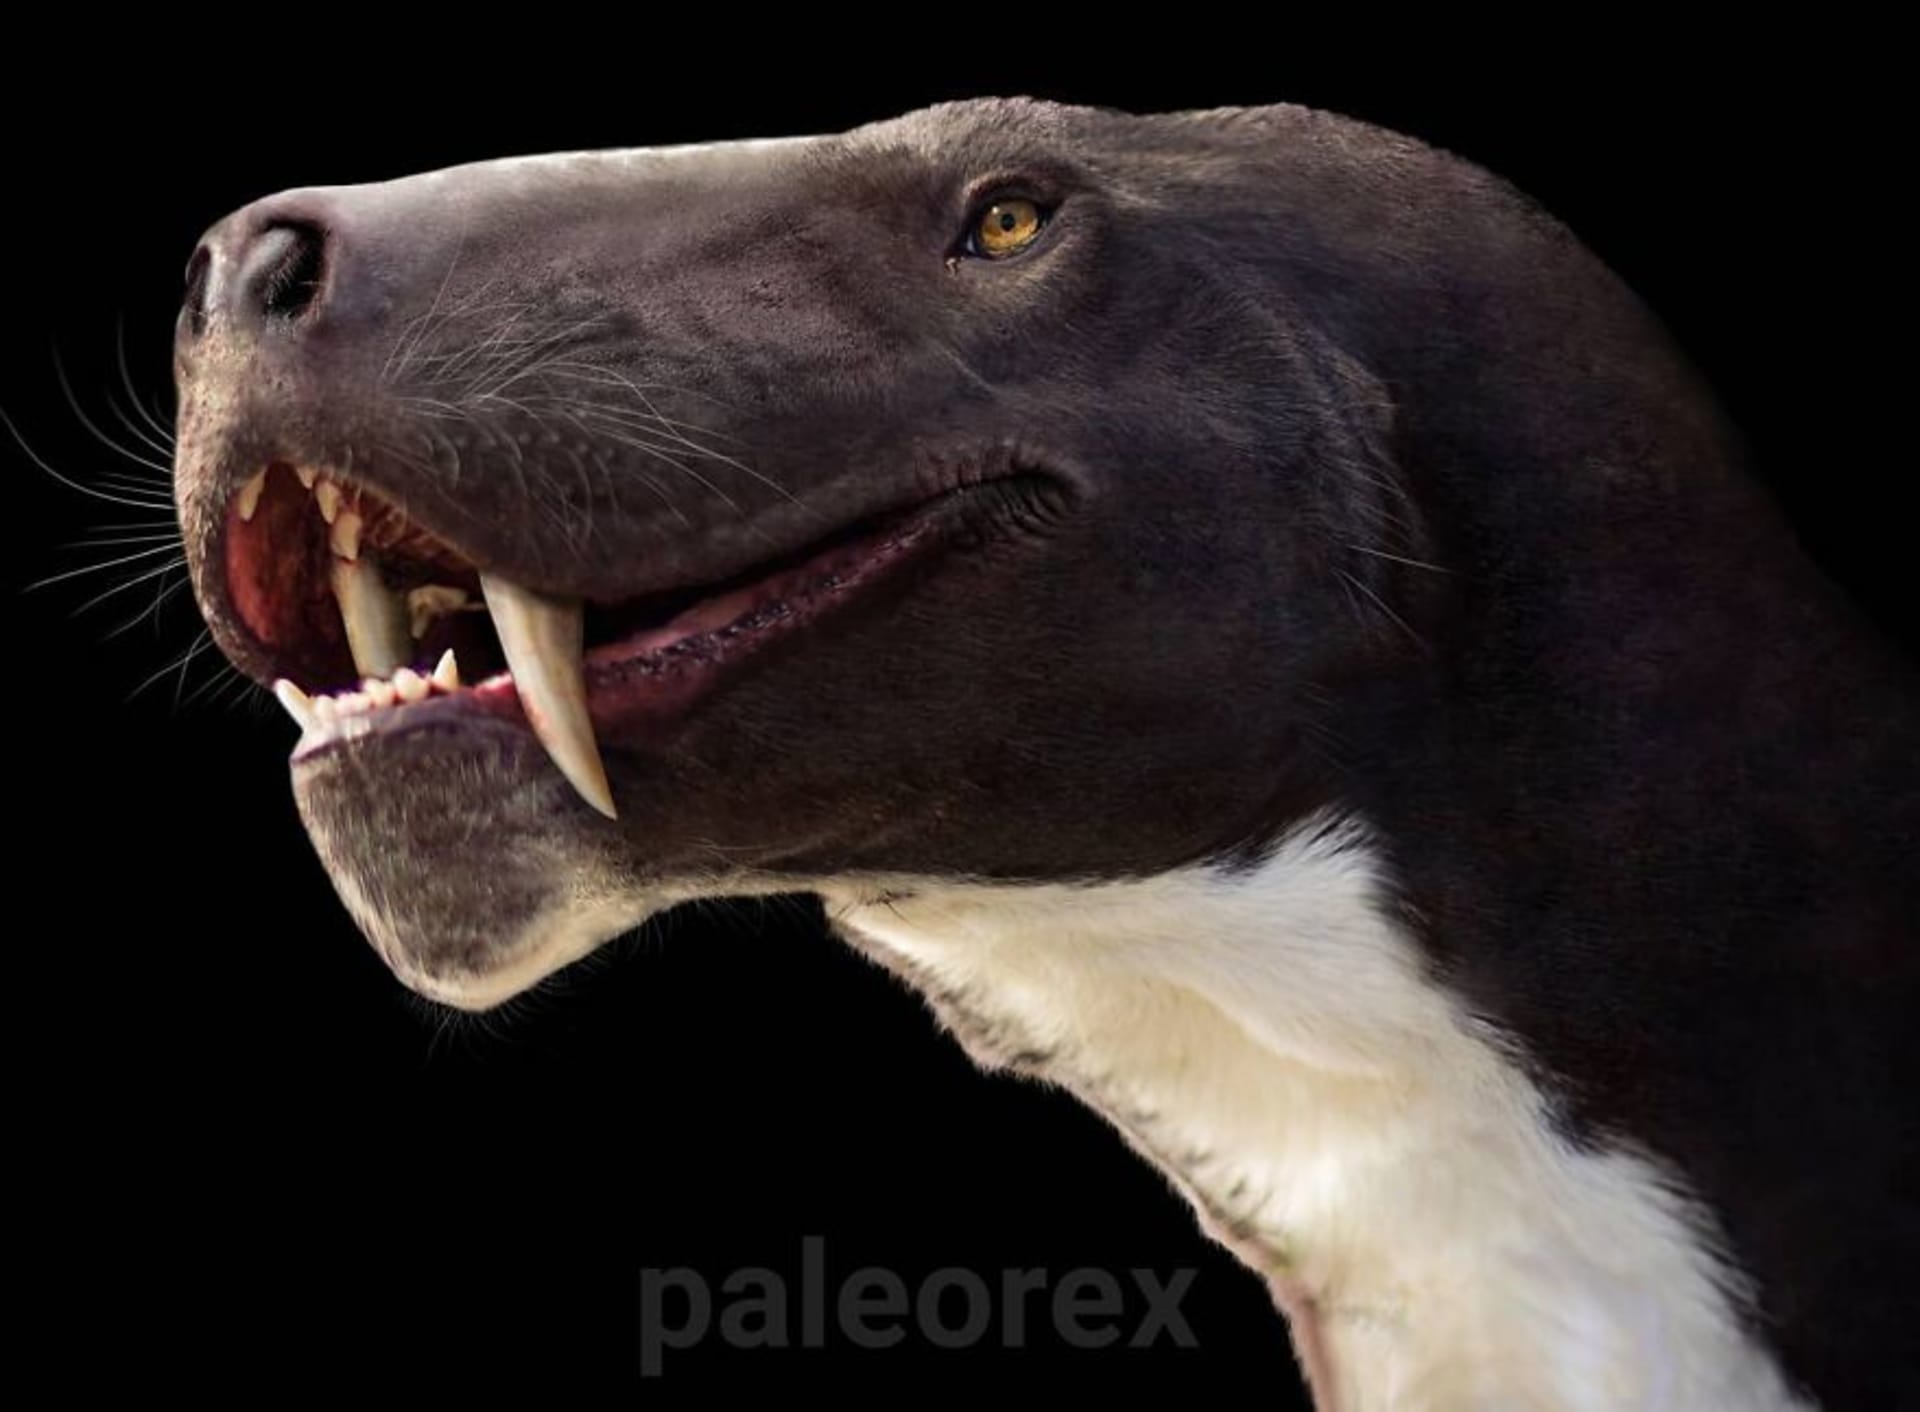 Paleorex 12